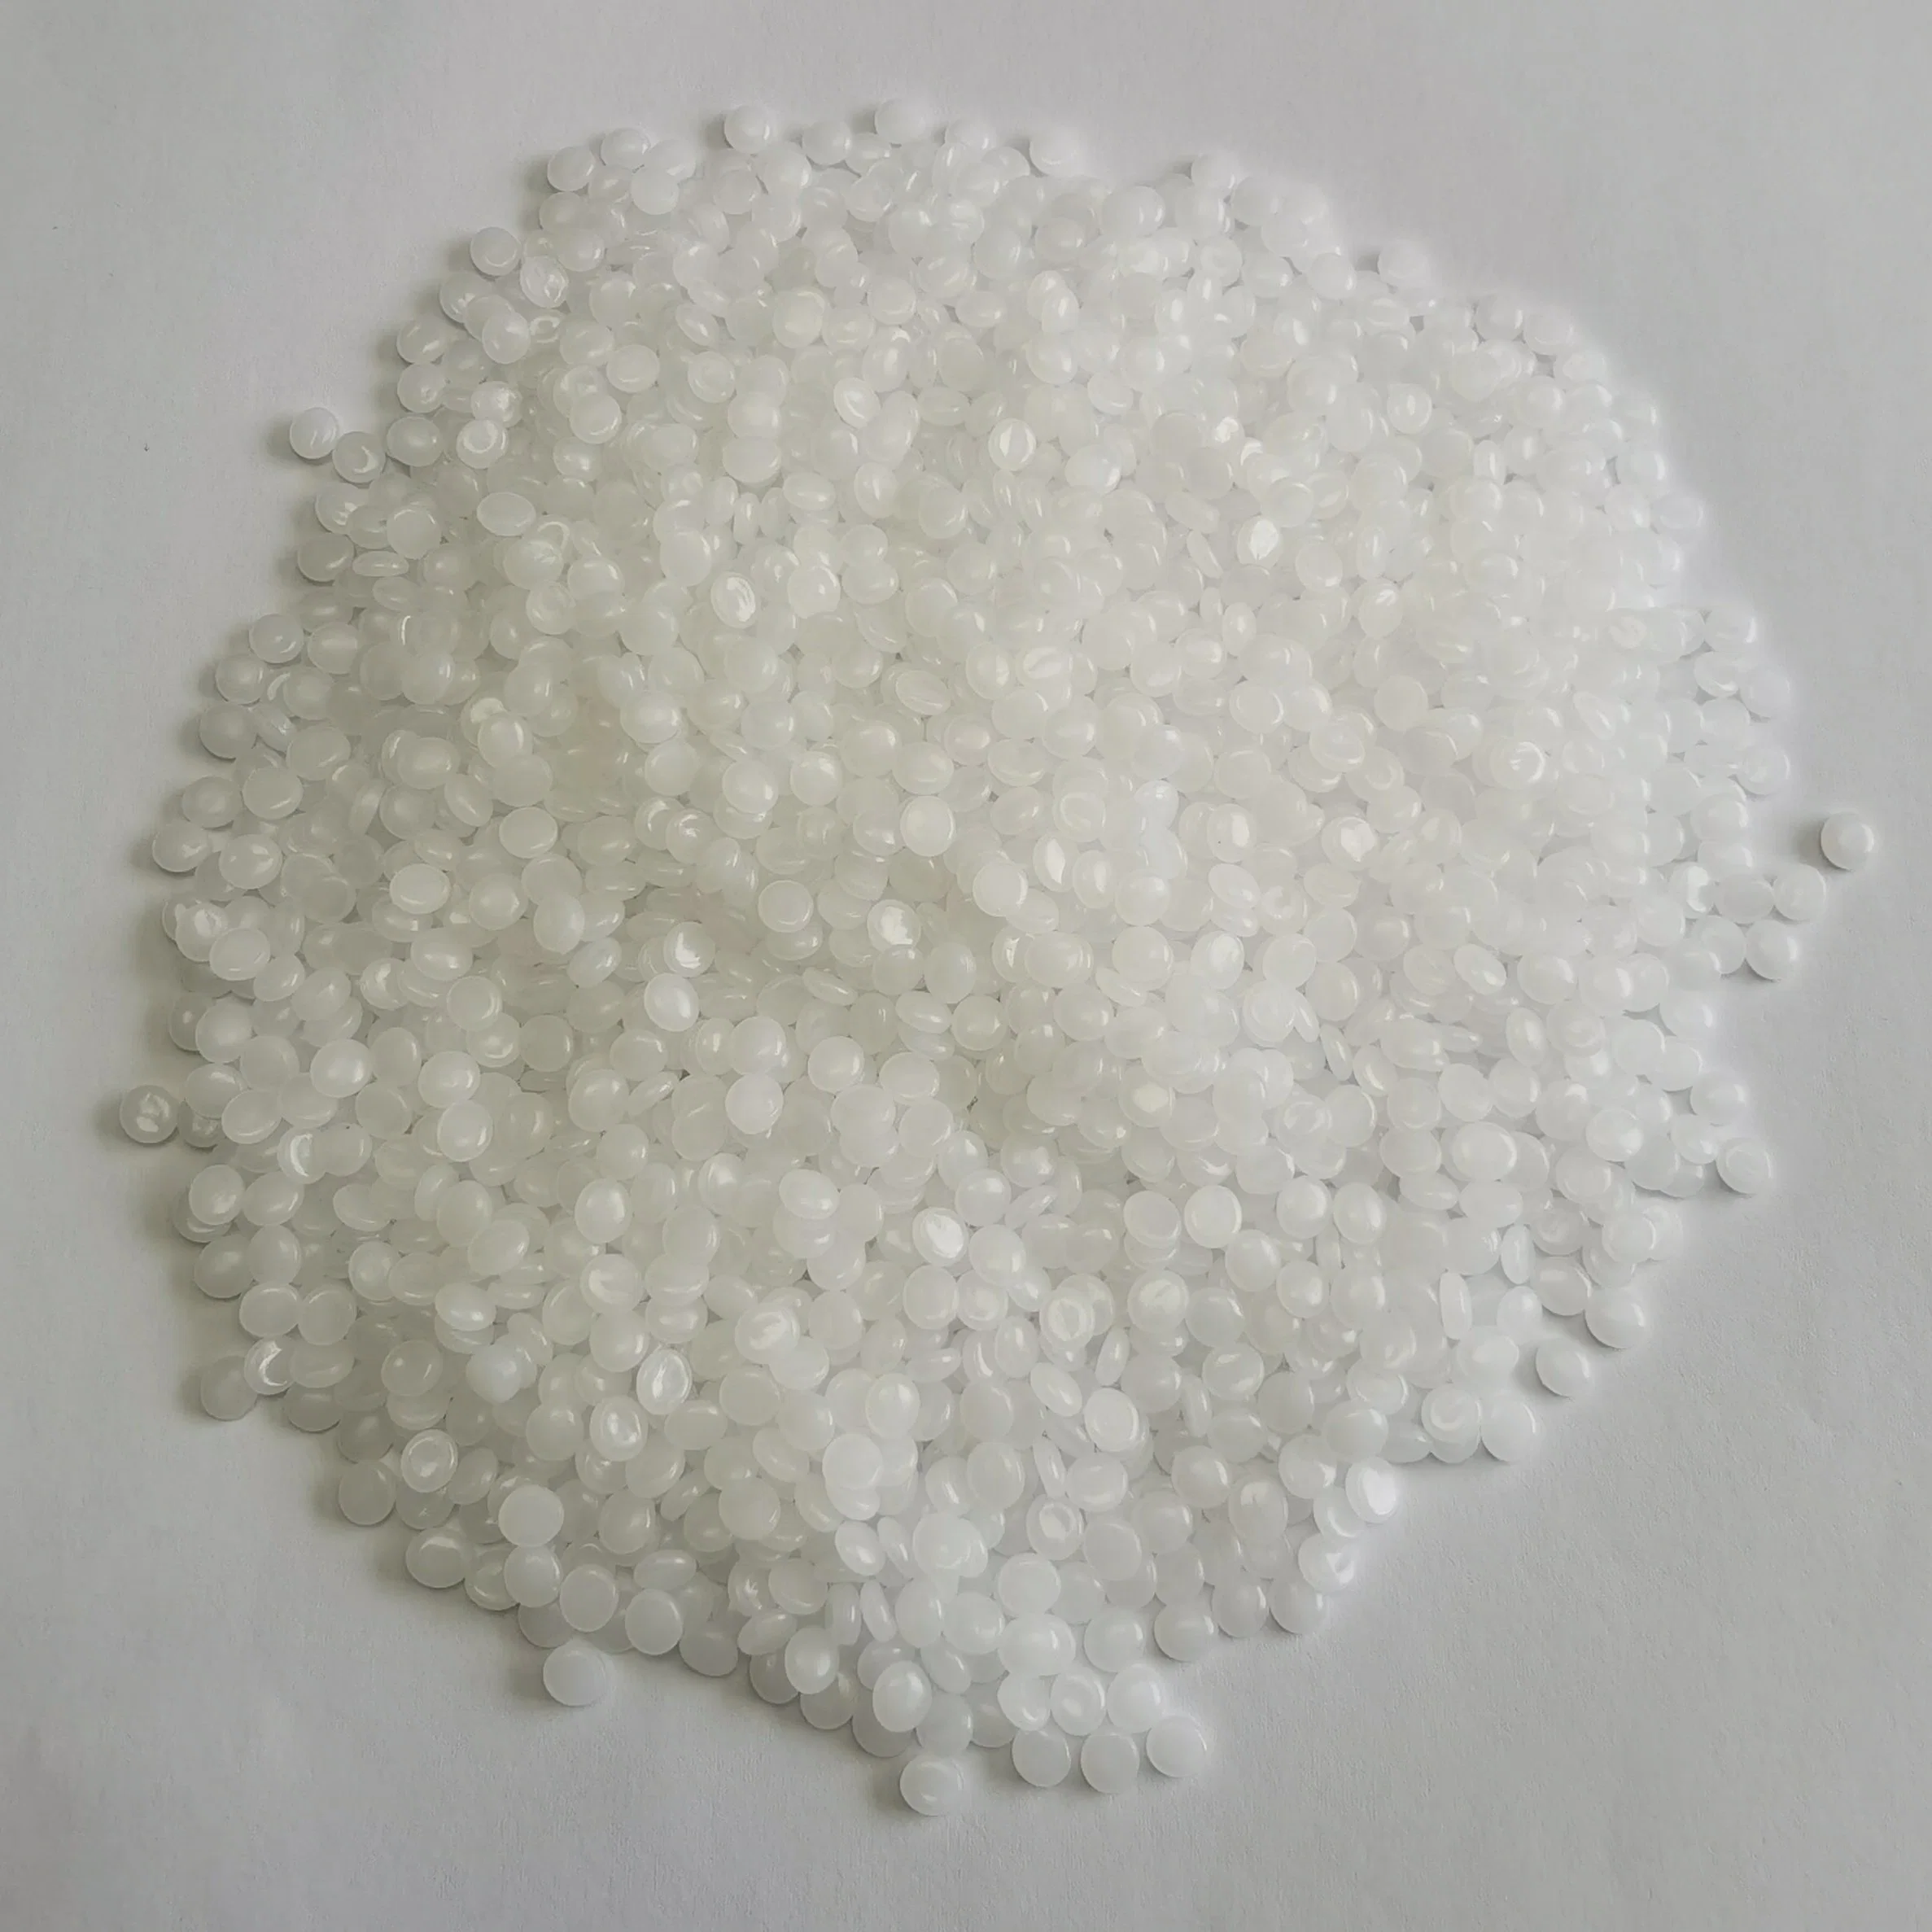 Kunststoff Rohstoff Weiße Virgin Granulat Homopolymer PP Polypropylen